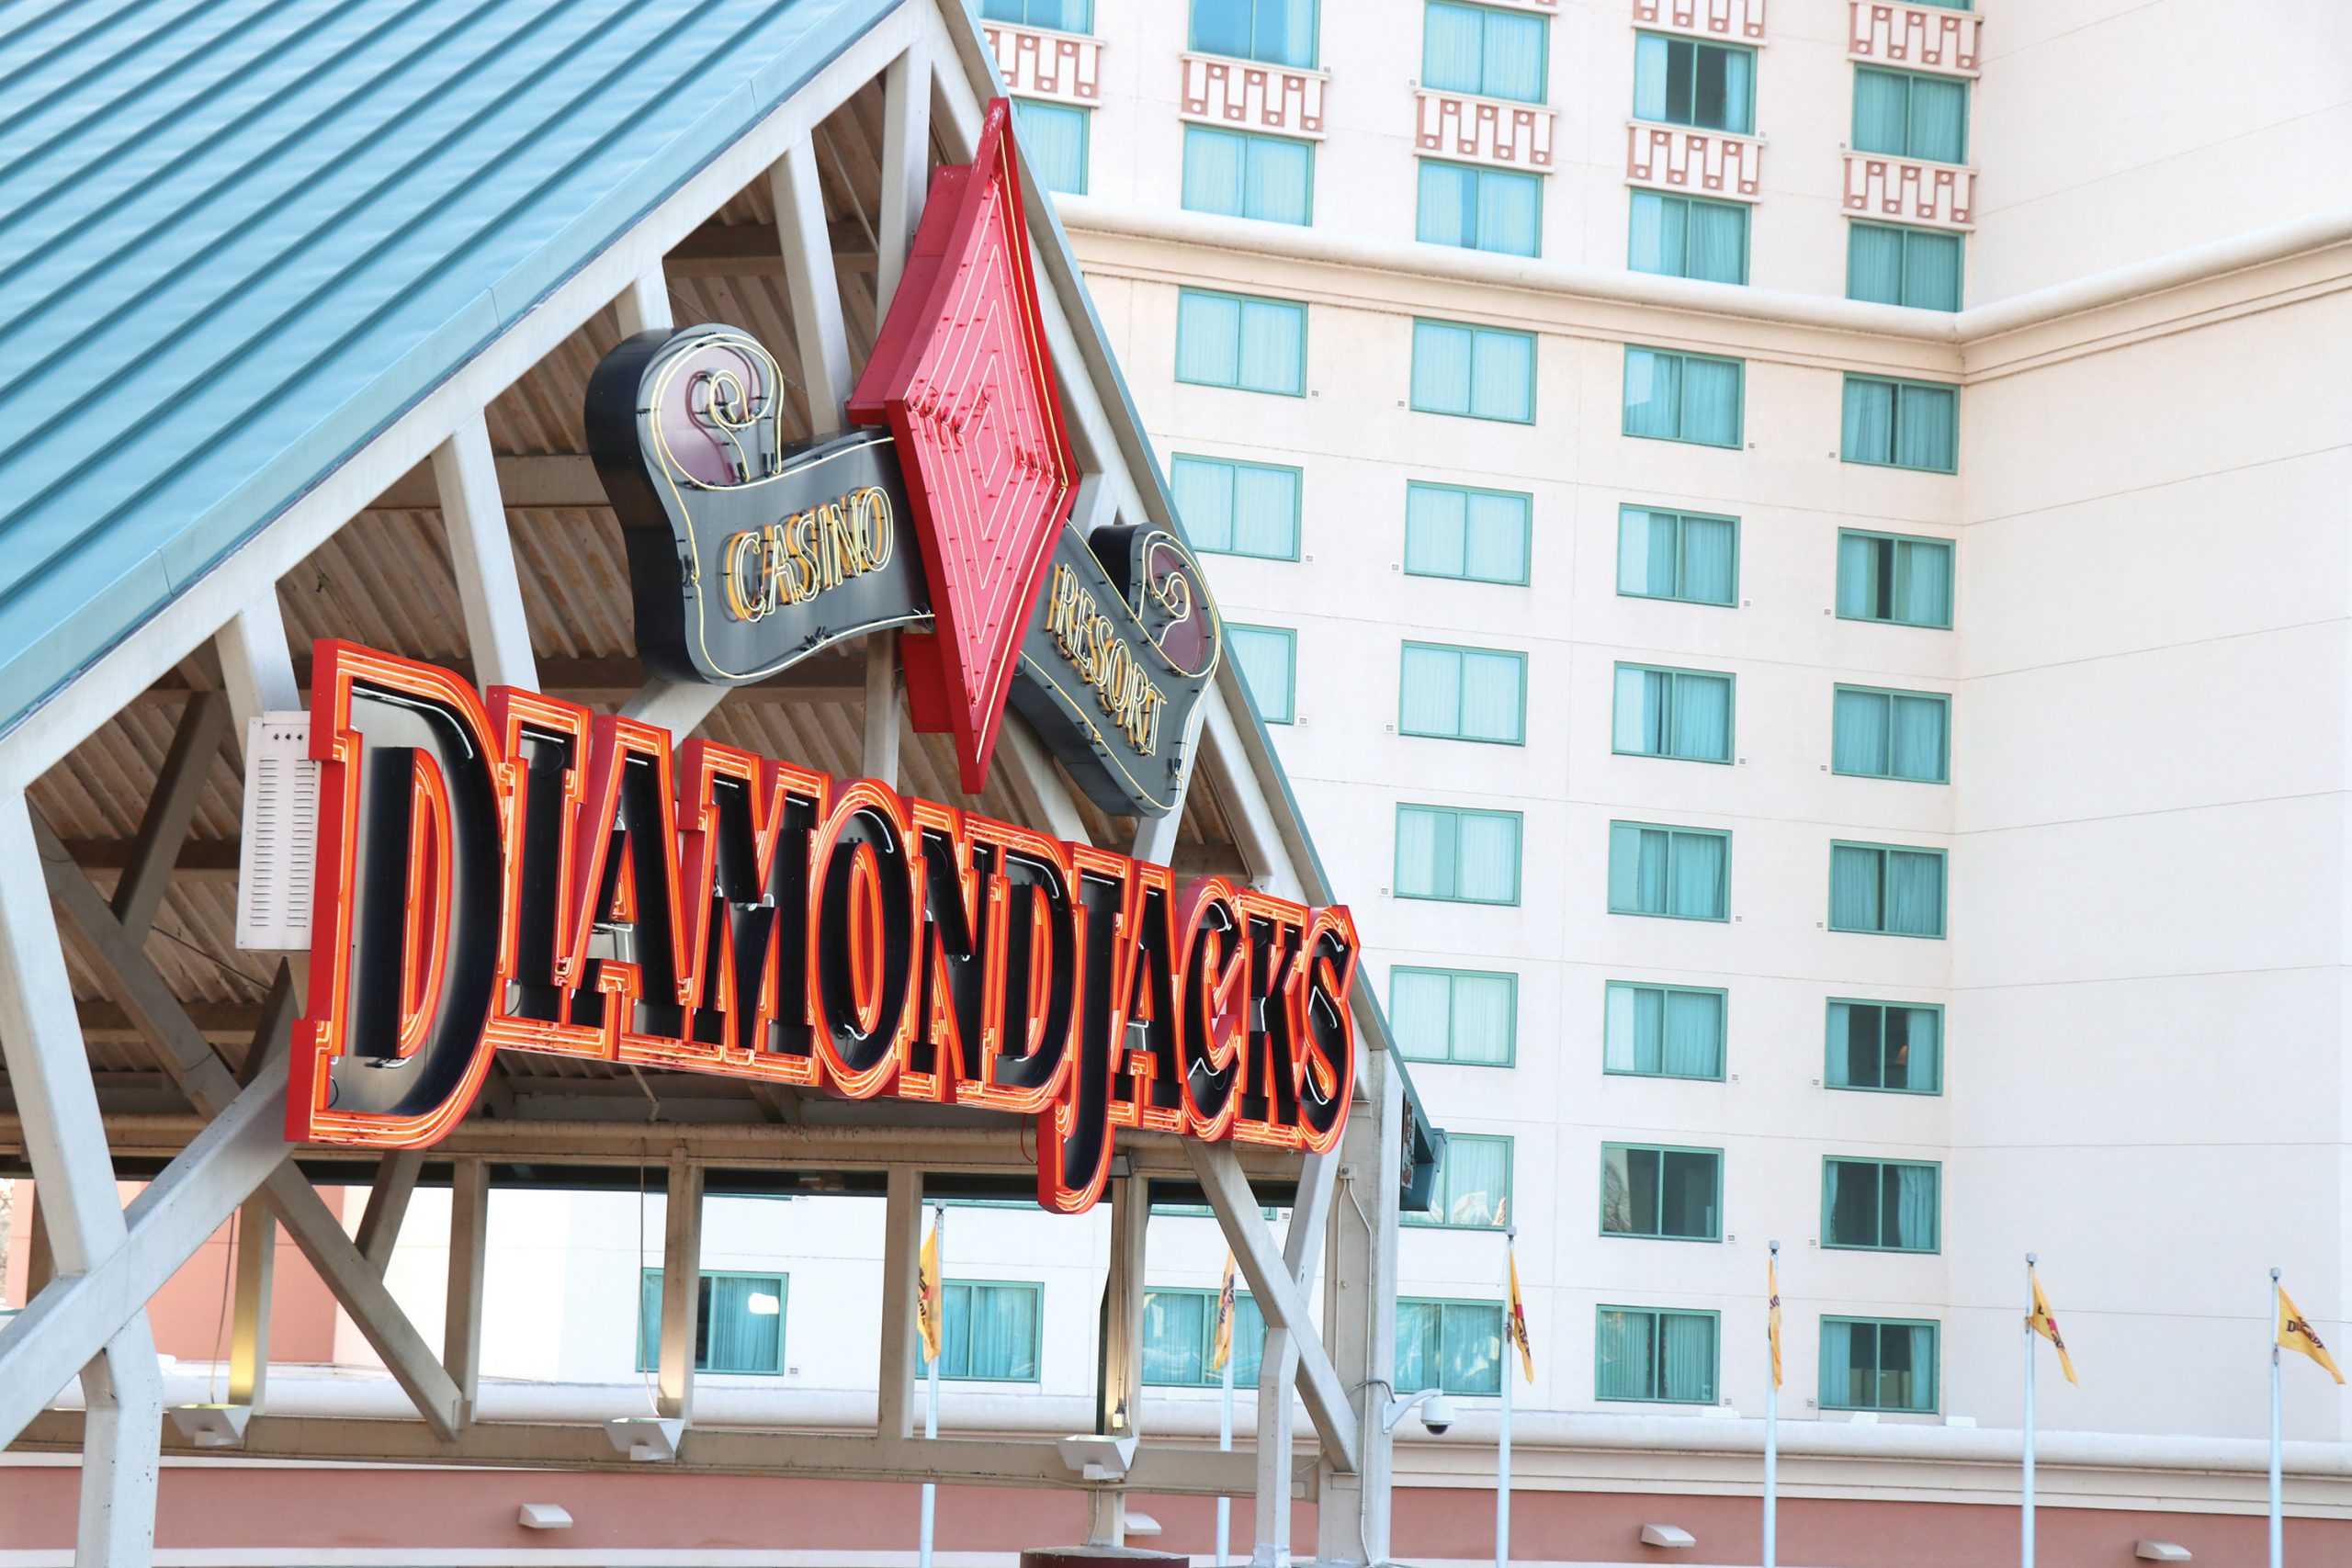 Sale plans advance for DiamondJacks Casino in Bossier City